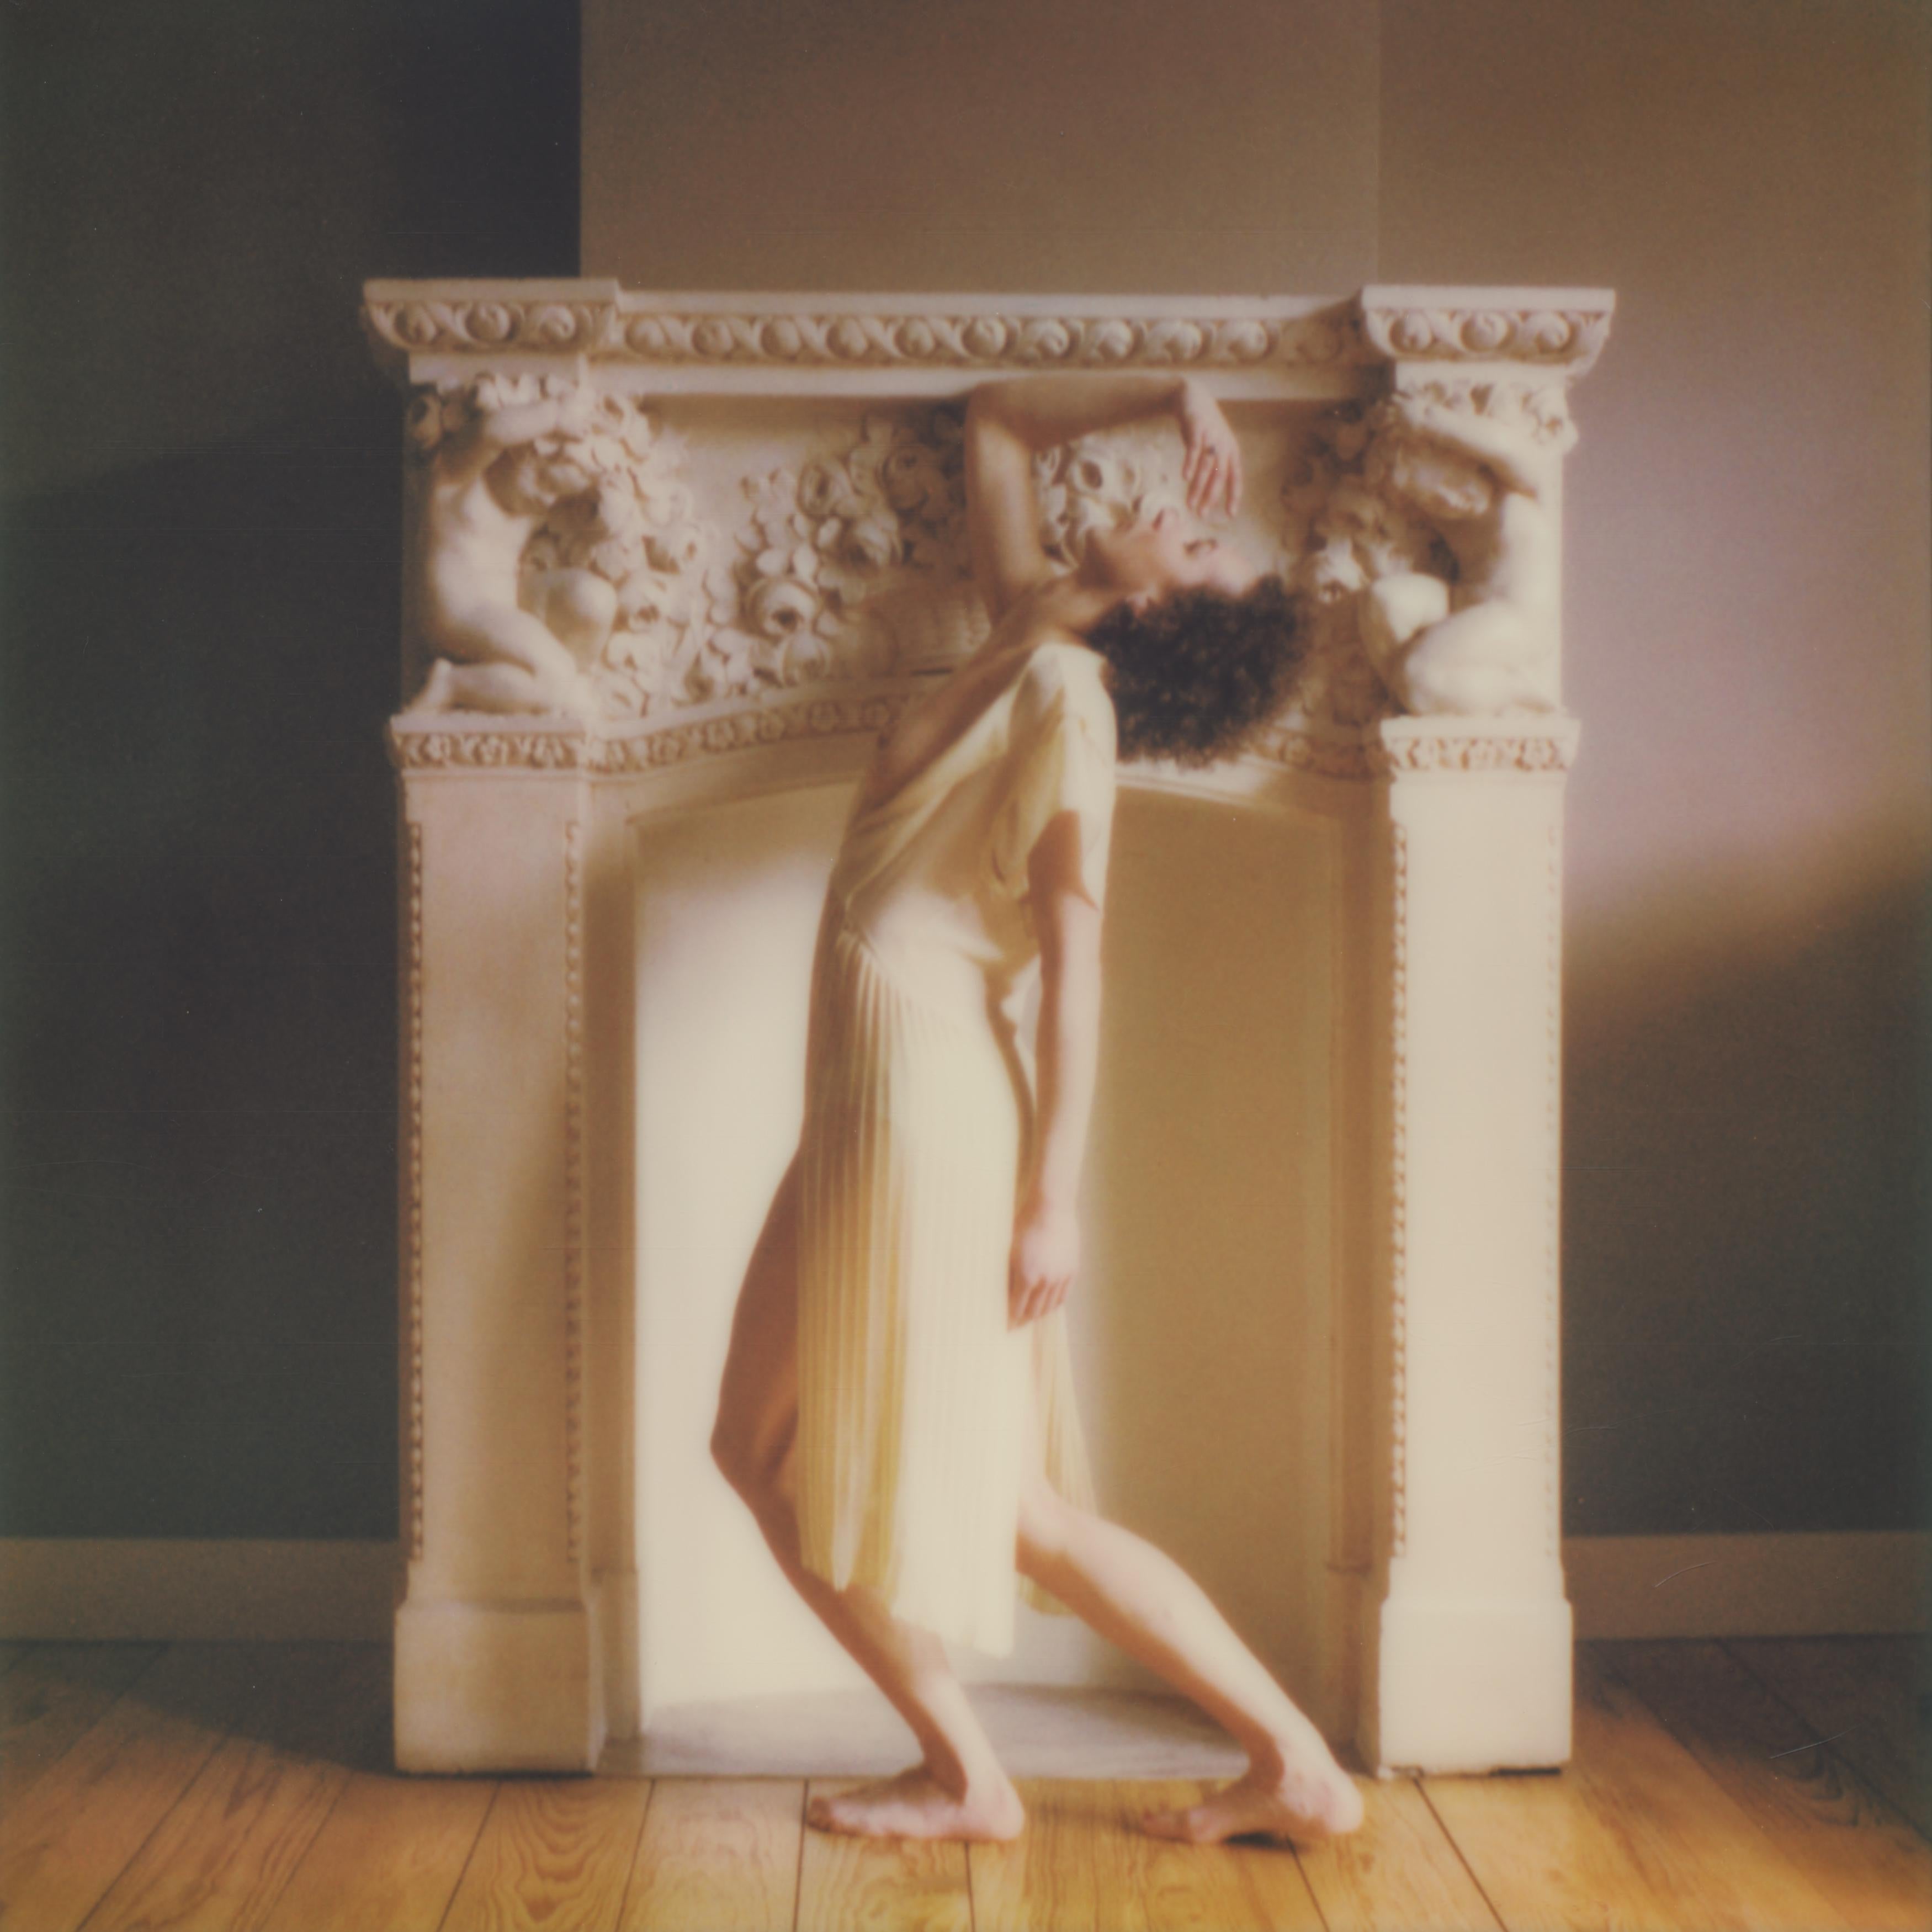 Kirsten Thys van den Audenaerde Portrait Photograph - Reinventing oneself, II - Polaroid, Contemporary, Color, 21st Century